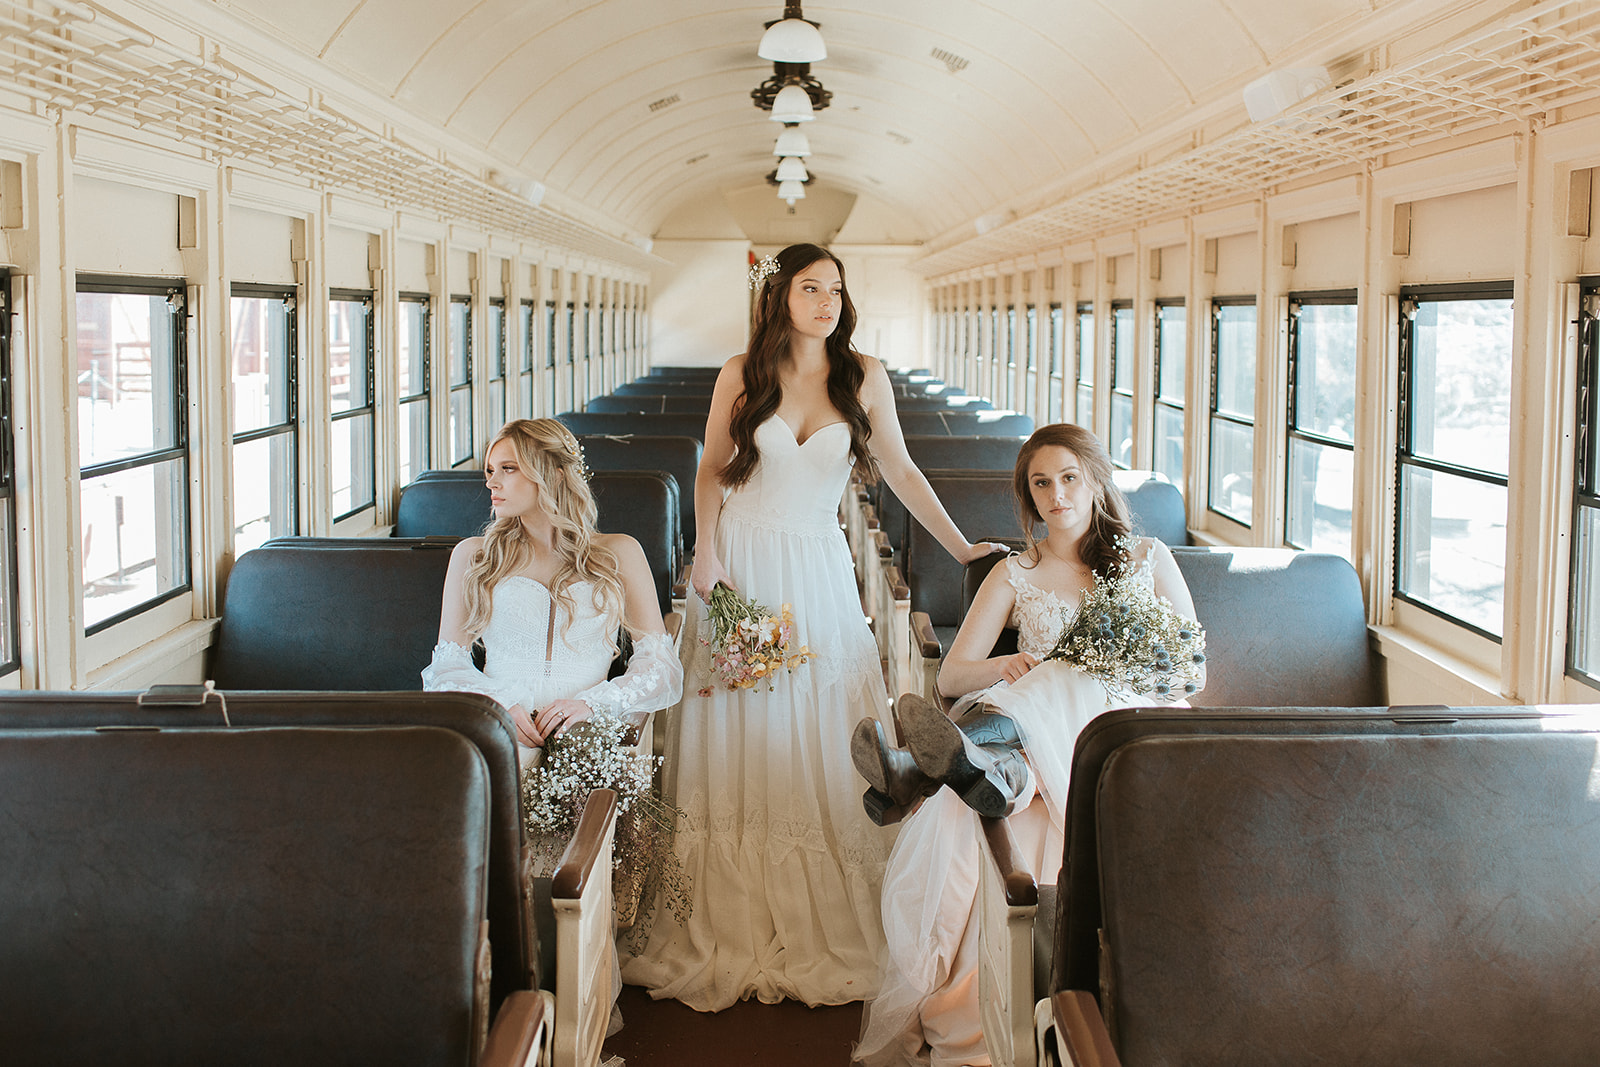 Wedding photo inside historic railcar